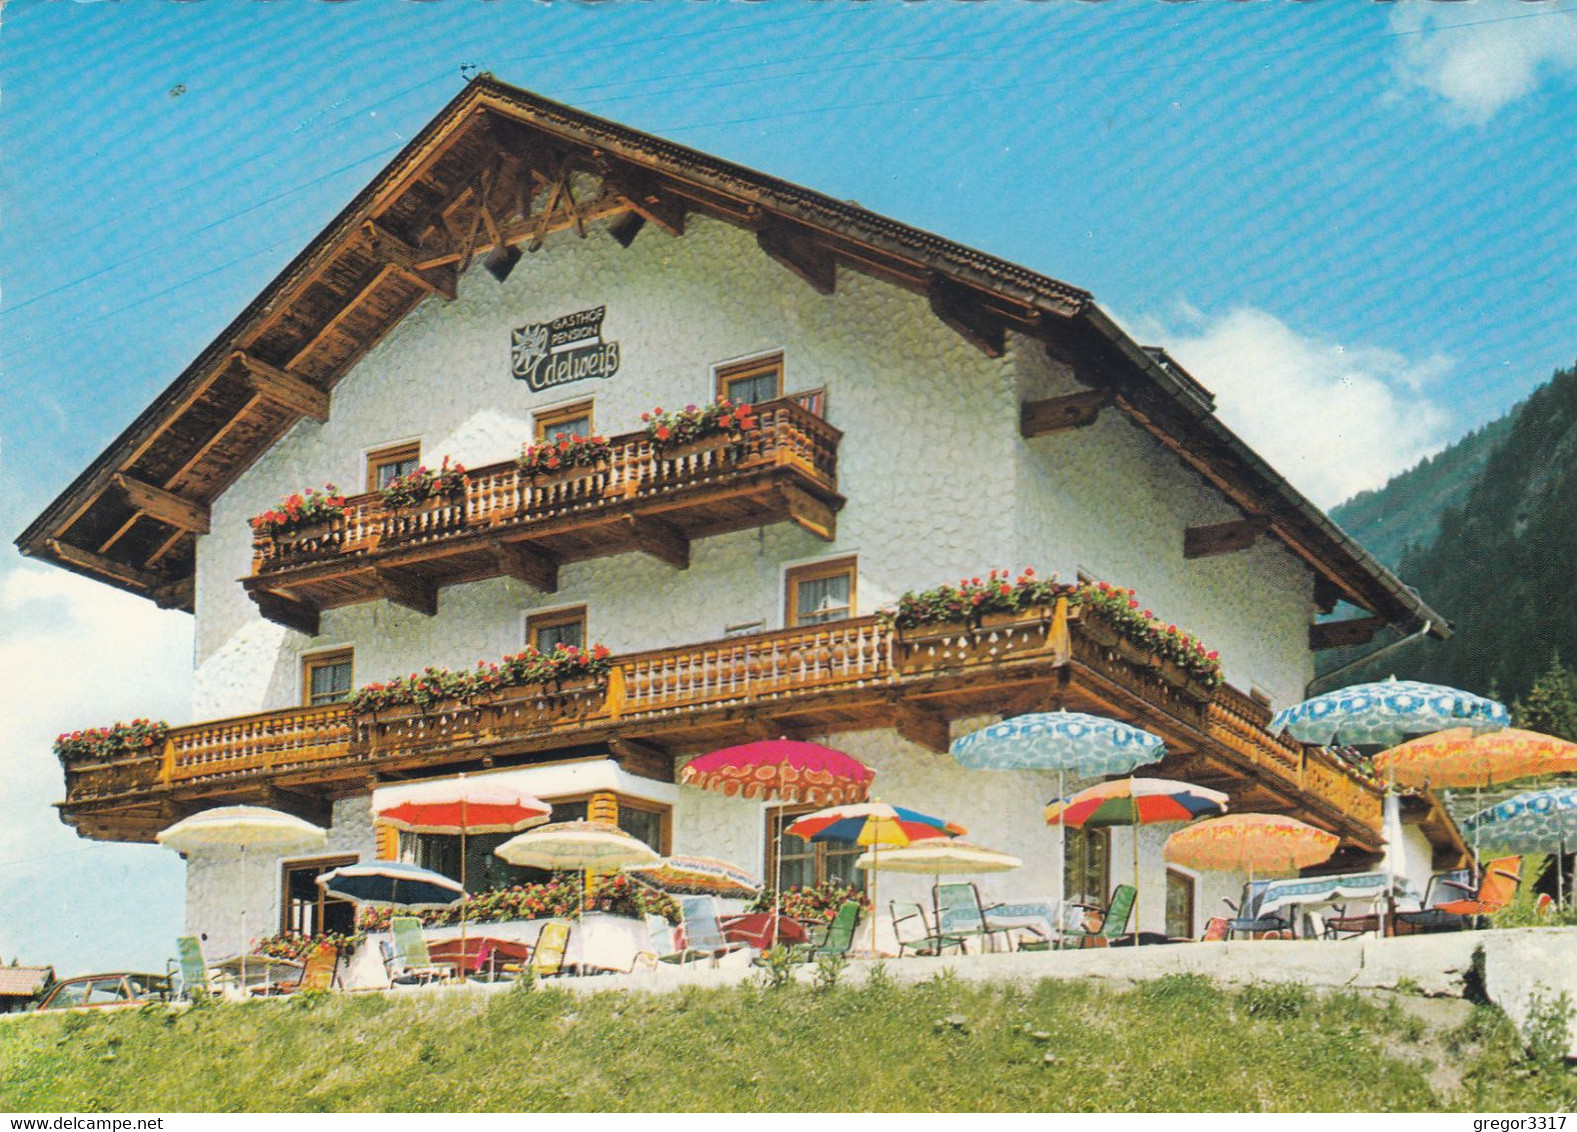 A4737) 6167 NEUSTIFT KRÖßBACH 382 - Gasthof EDELWEIß - Bes. Pfurtscheller 1975 - Neustift Im Stubaital